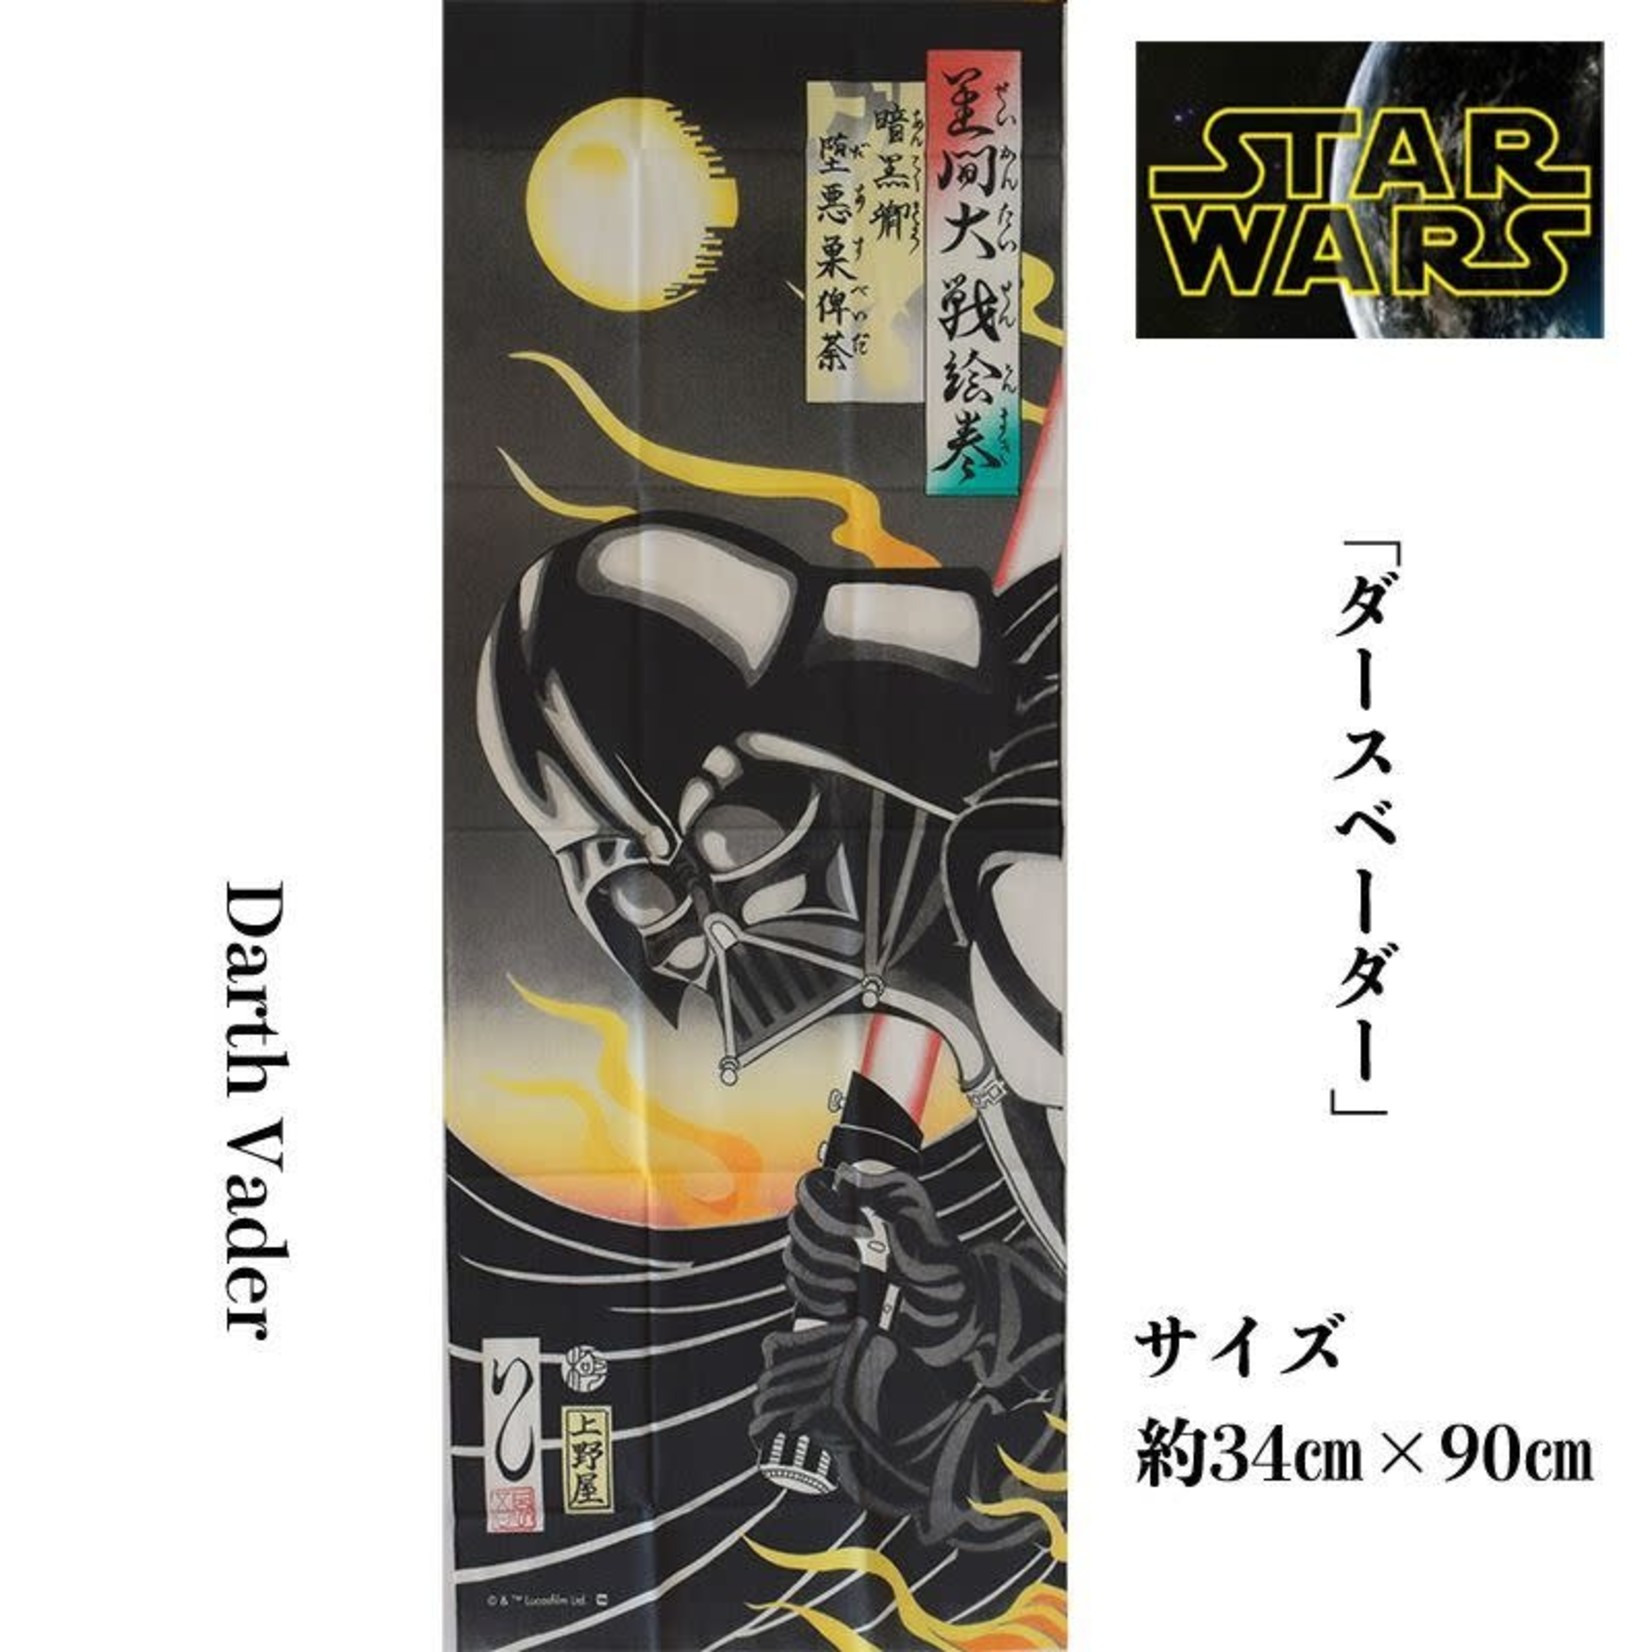 Star Wars - Darth Vader Tenugui